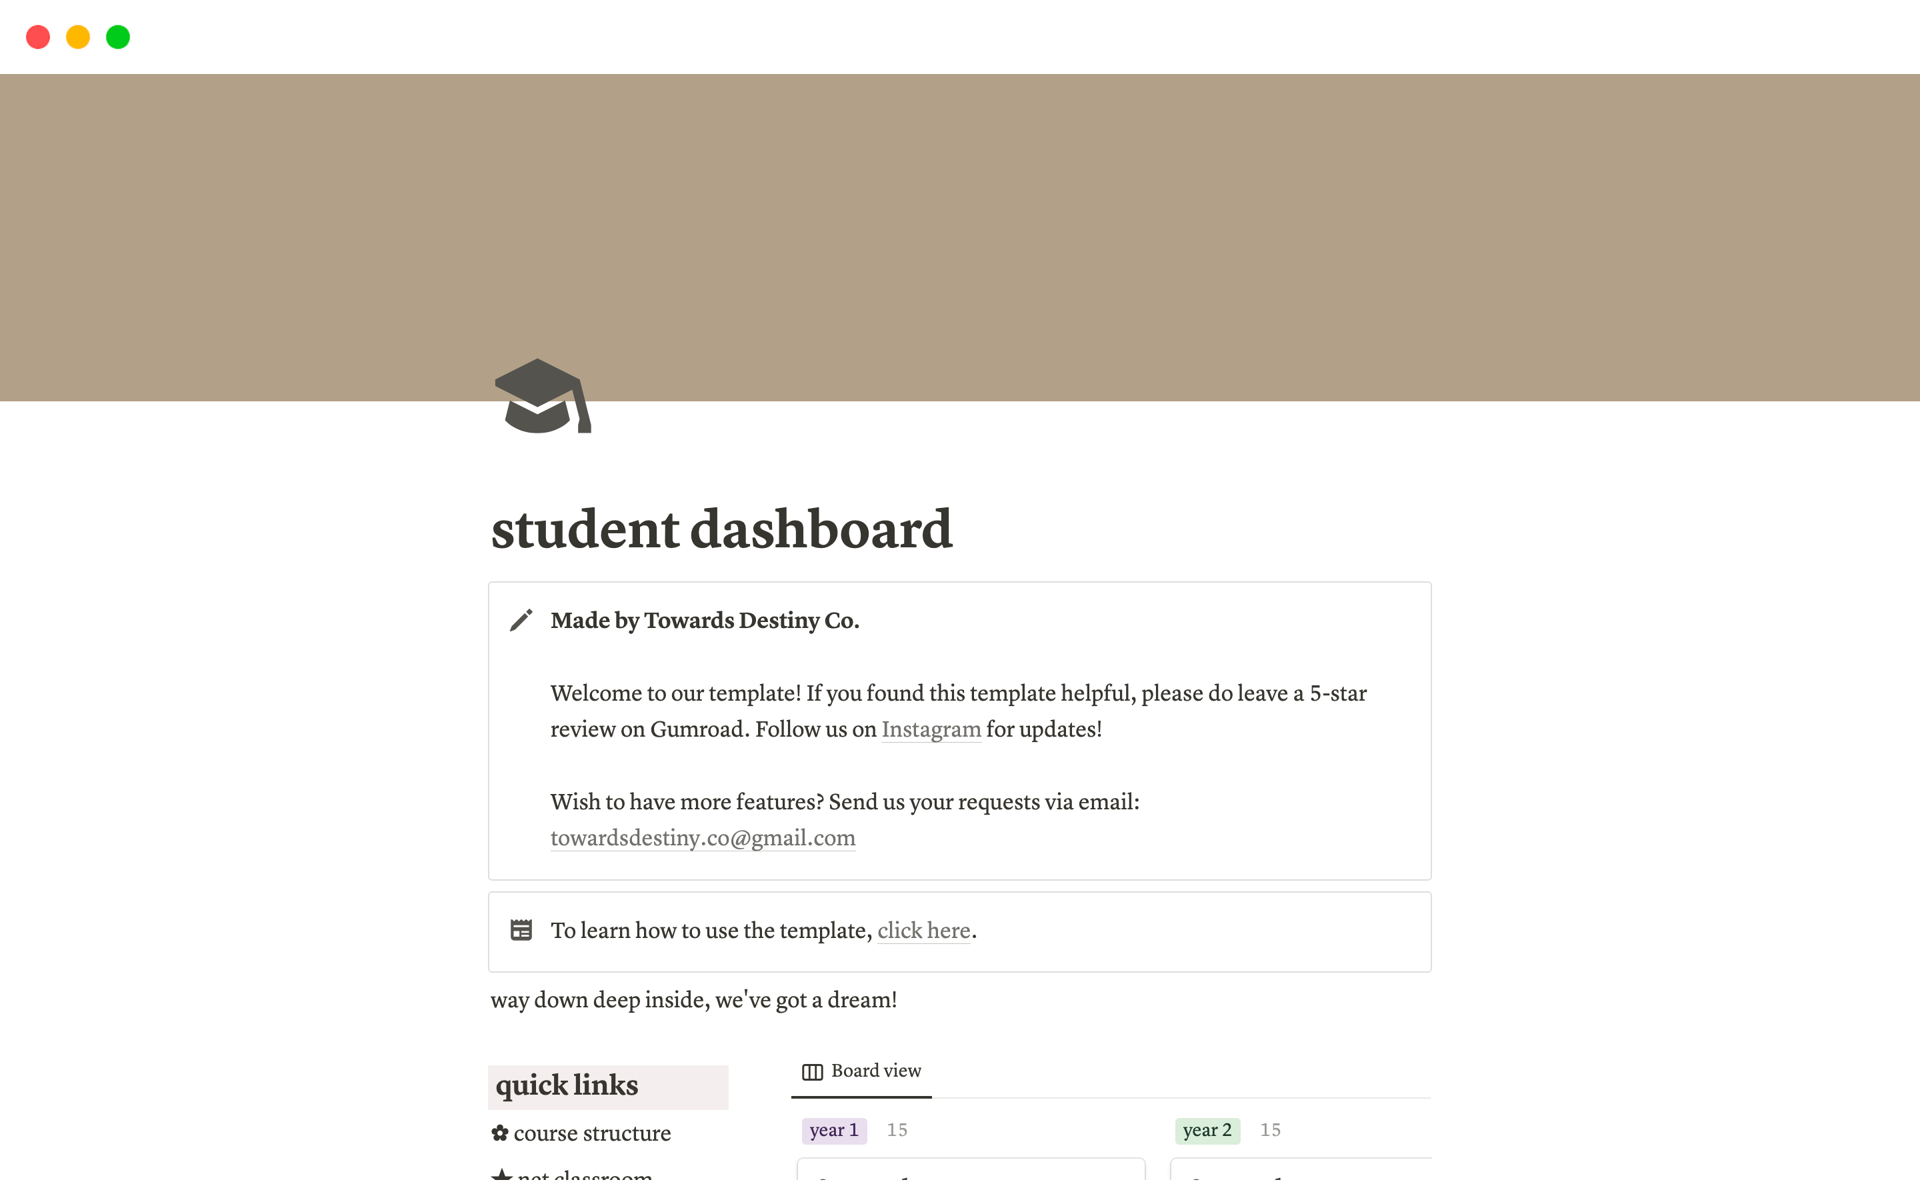 Aperçu du modèle de student dashboard